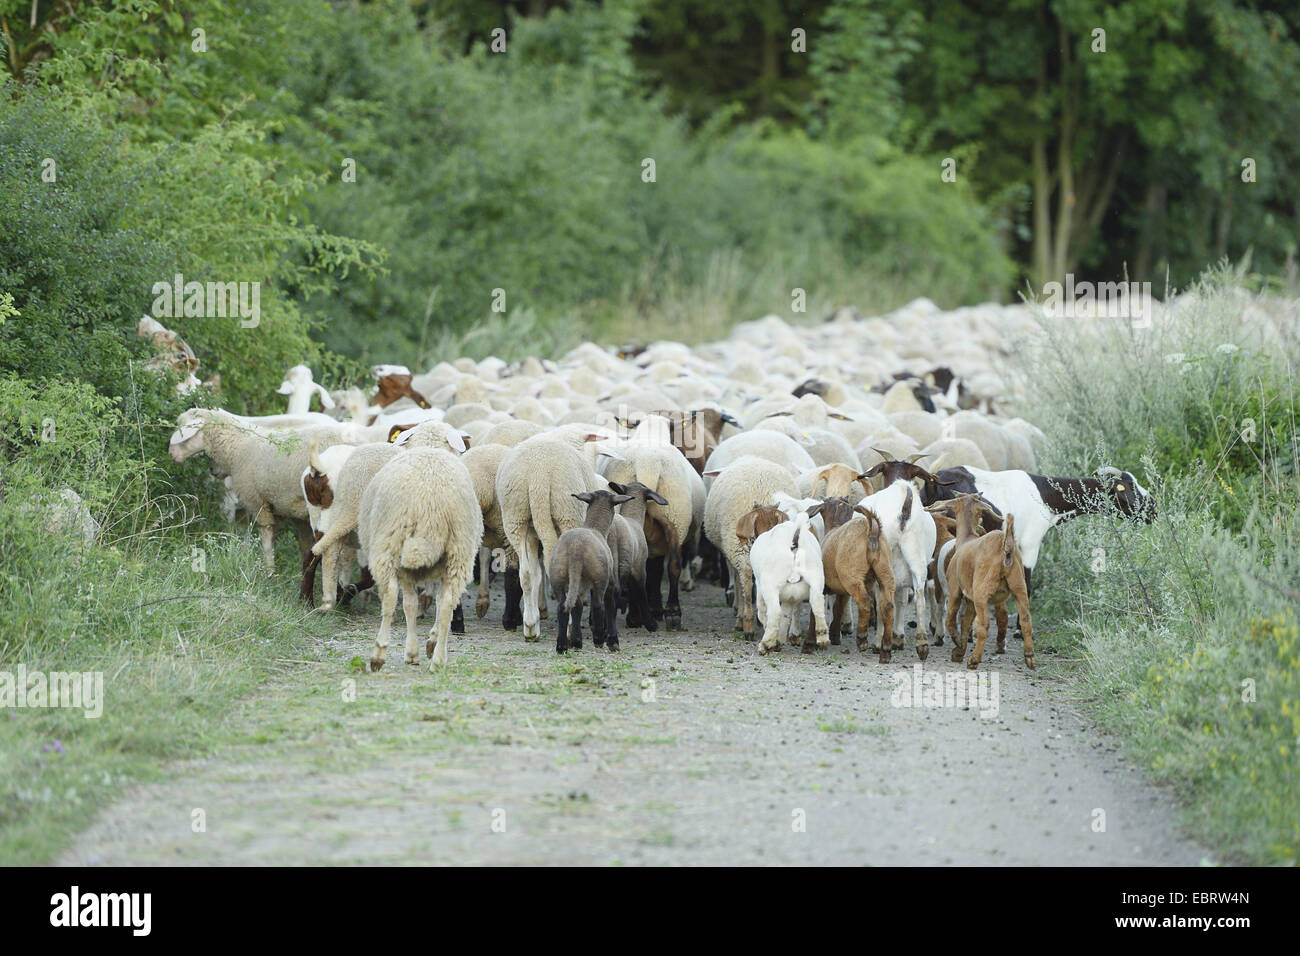 Boer goat (Capra hircus, Capra aegagrus f. hircus), Flockp of Boer goats and Sheep on a field path, Germany, Bavaria Stock Photo